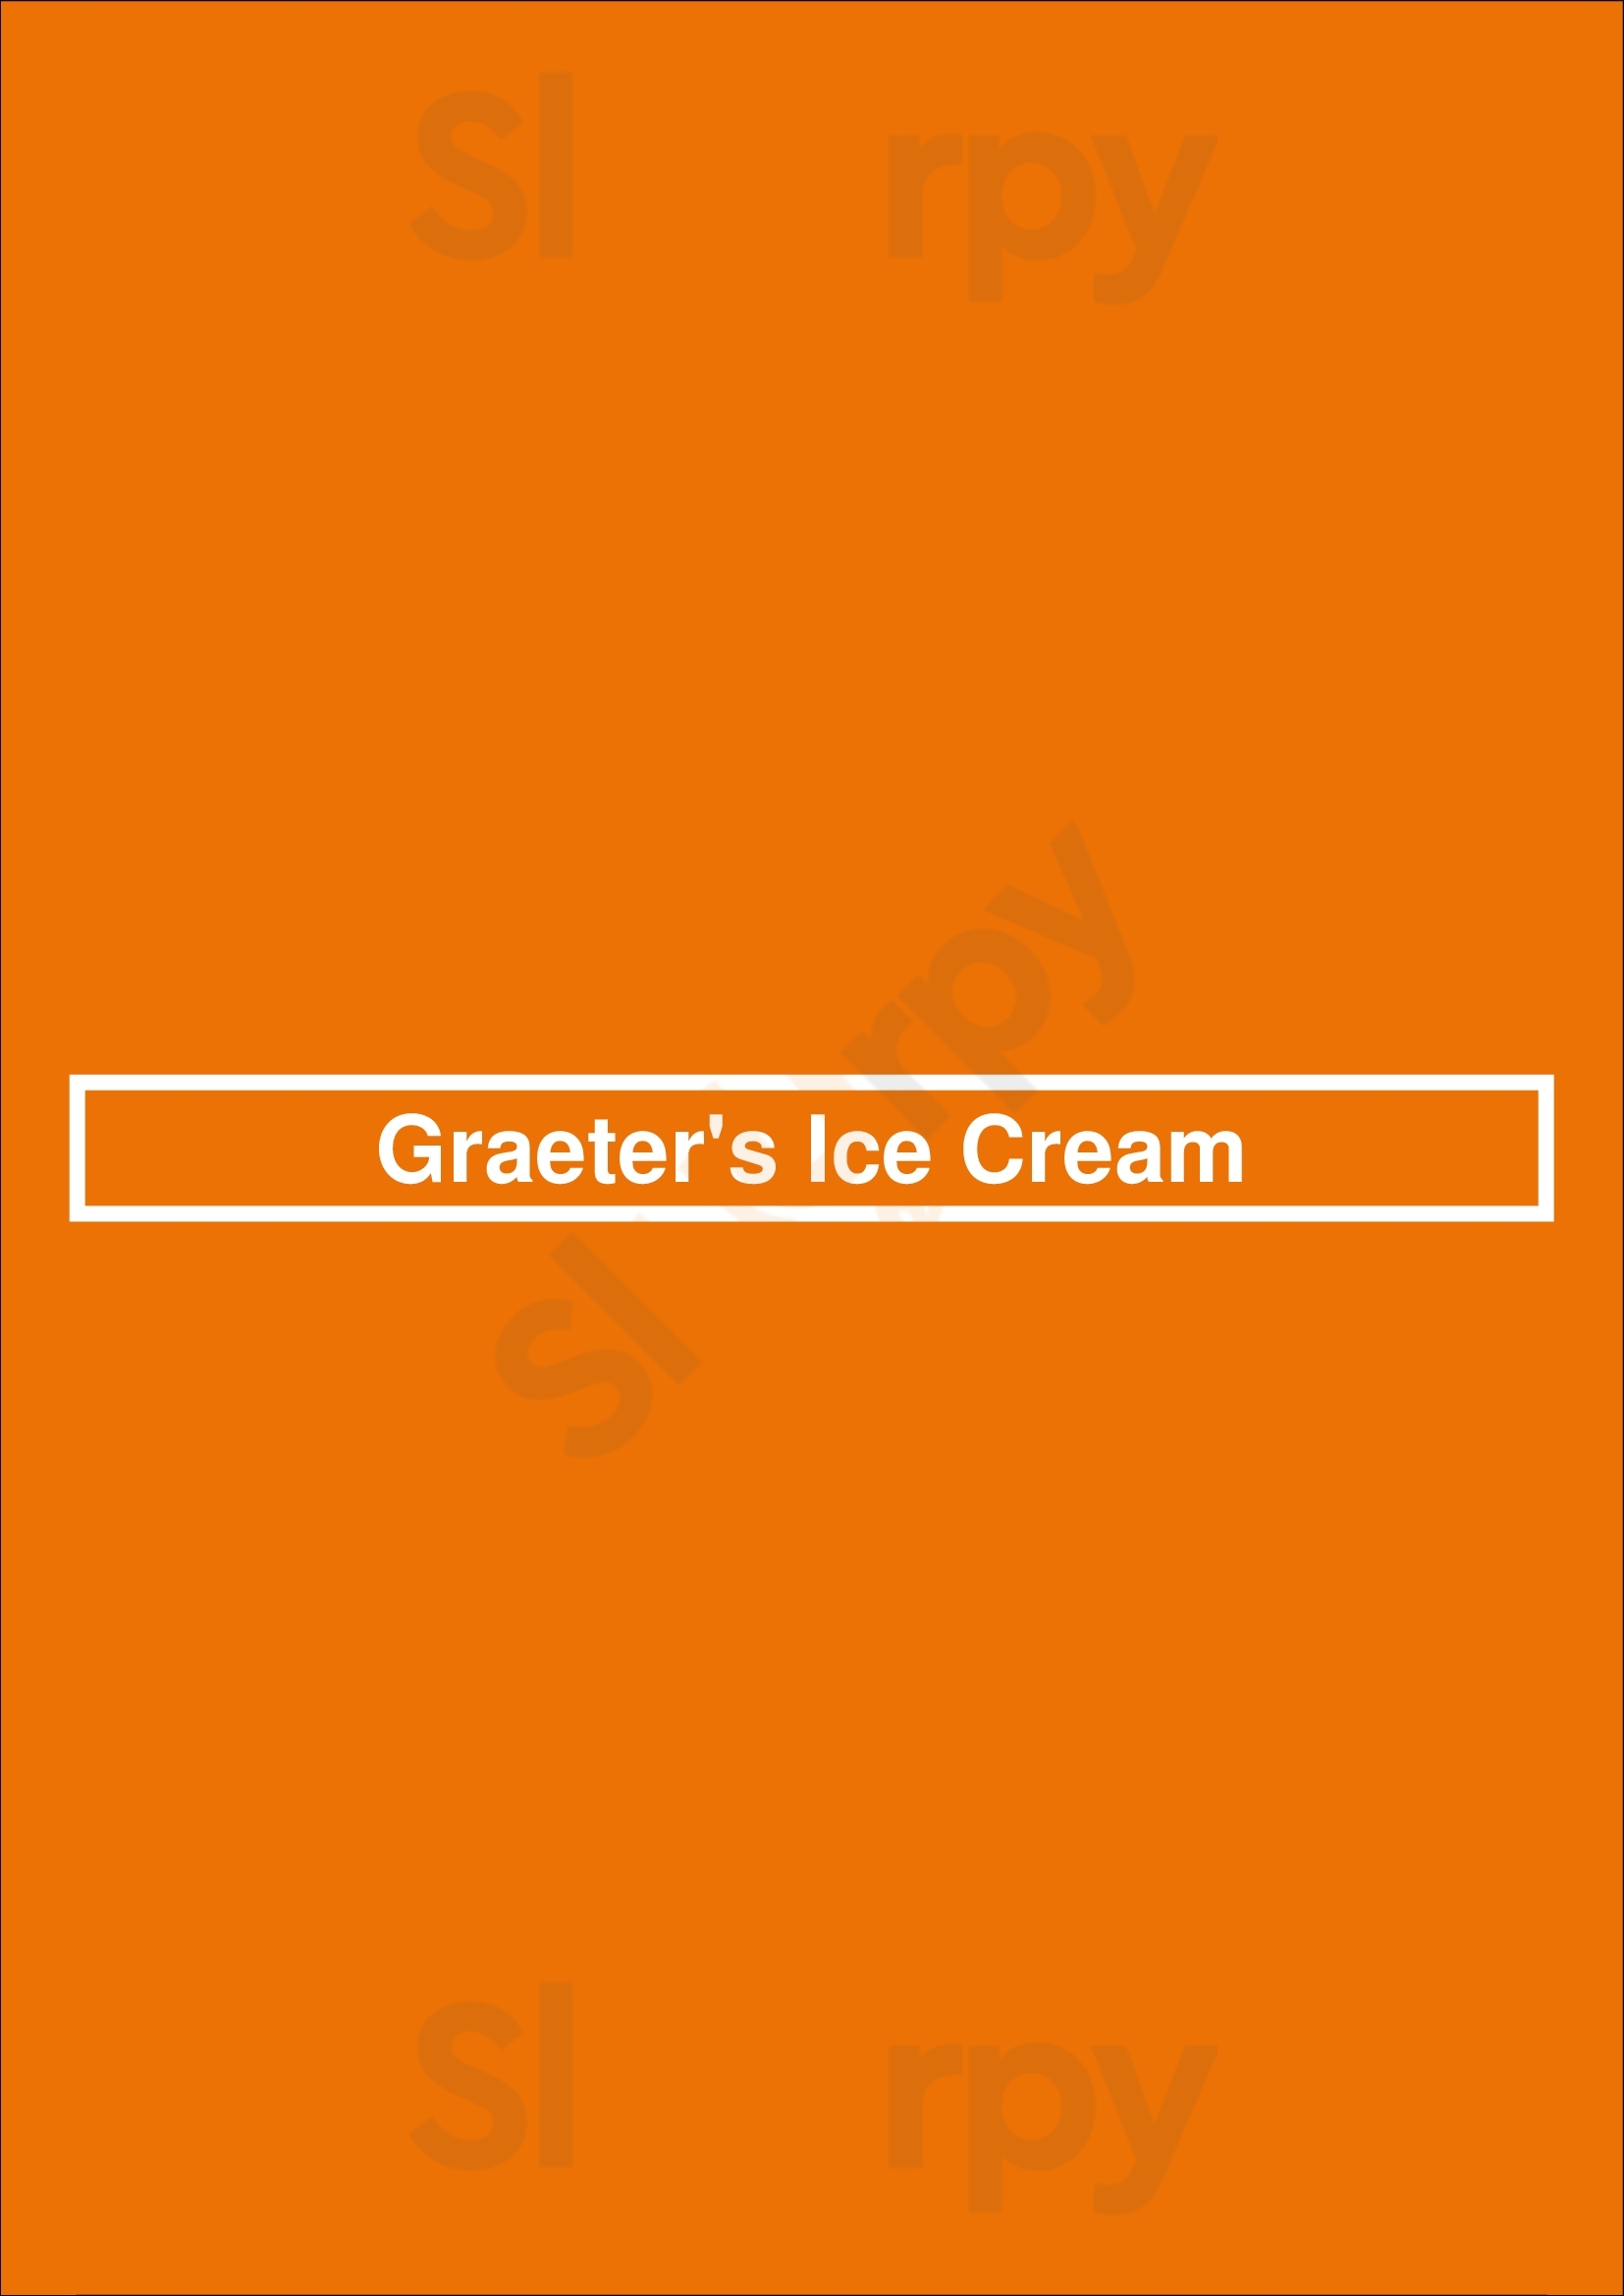 Graeter's Ice Cream Cincinnati Menu - 1